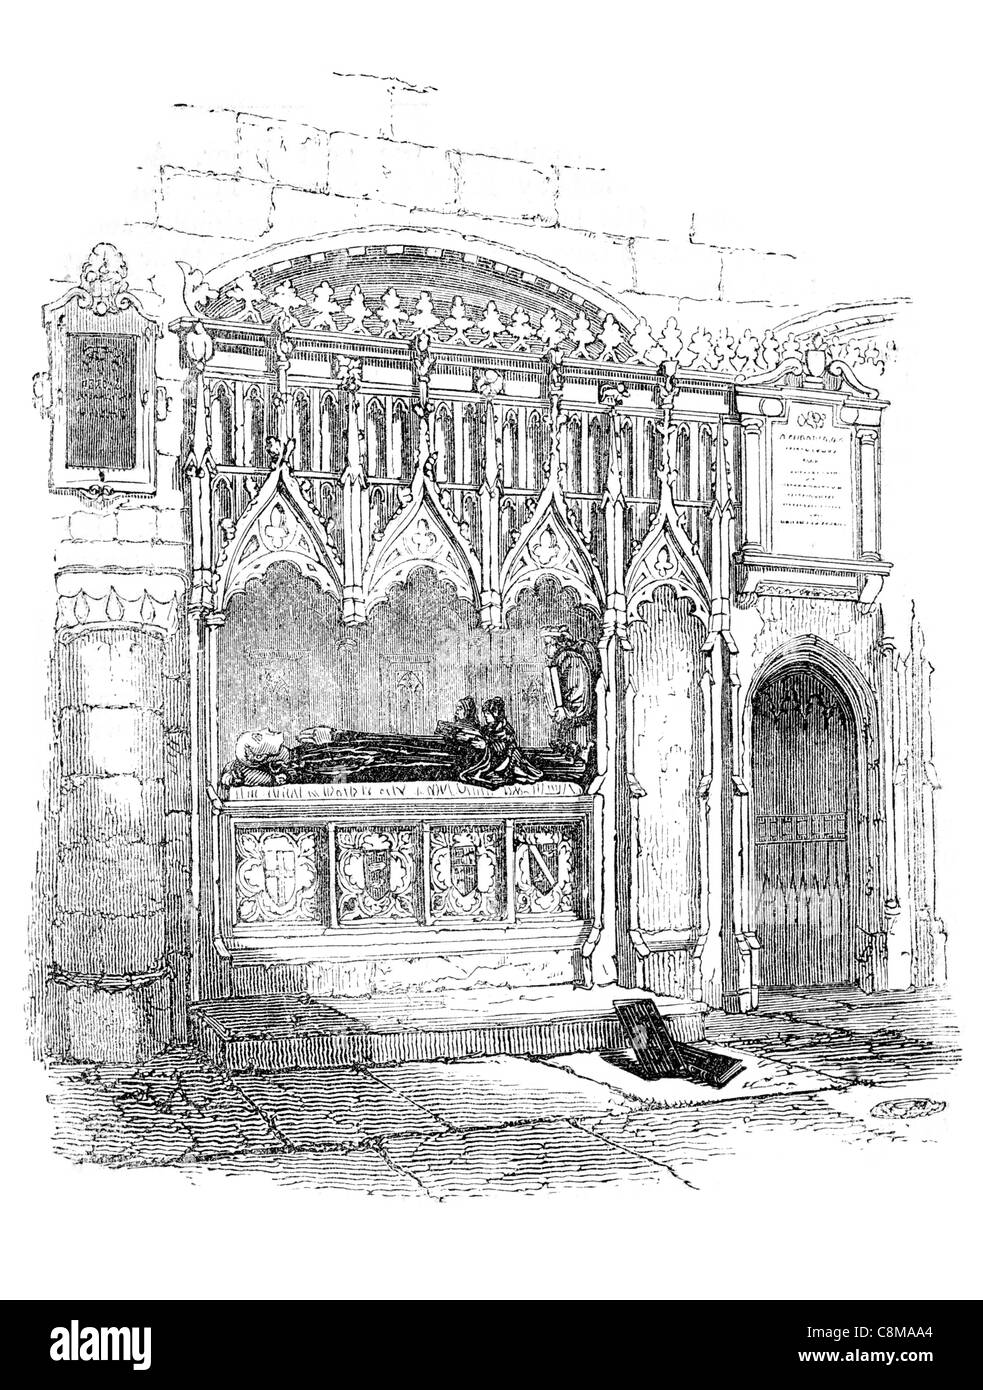 Tomb prior Rahere Raher Raherius clergyman King Henry I St Bartholomew's Hospital clerk courtier minstrel jester Stock Photo